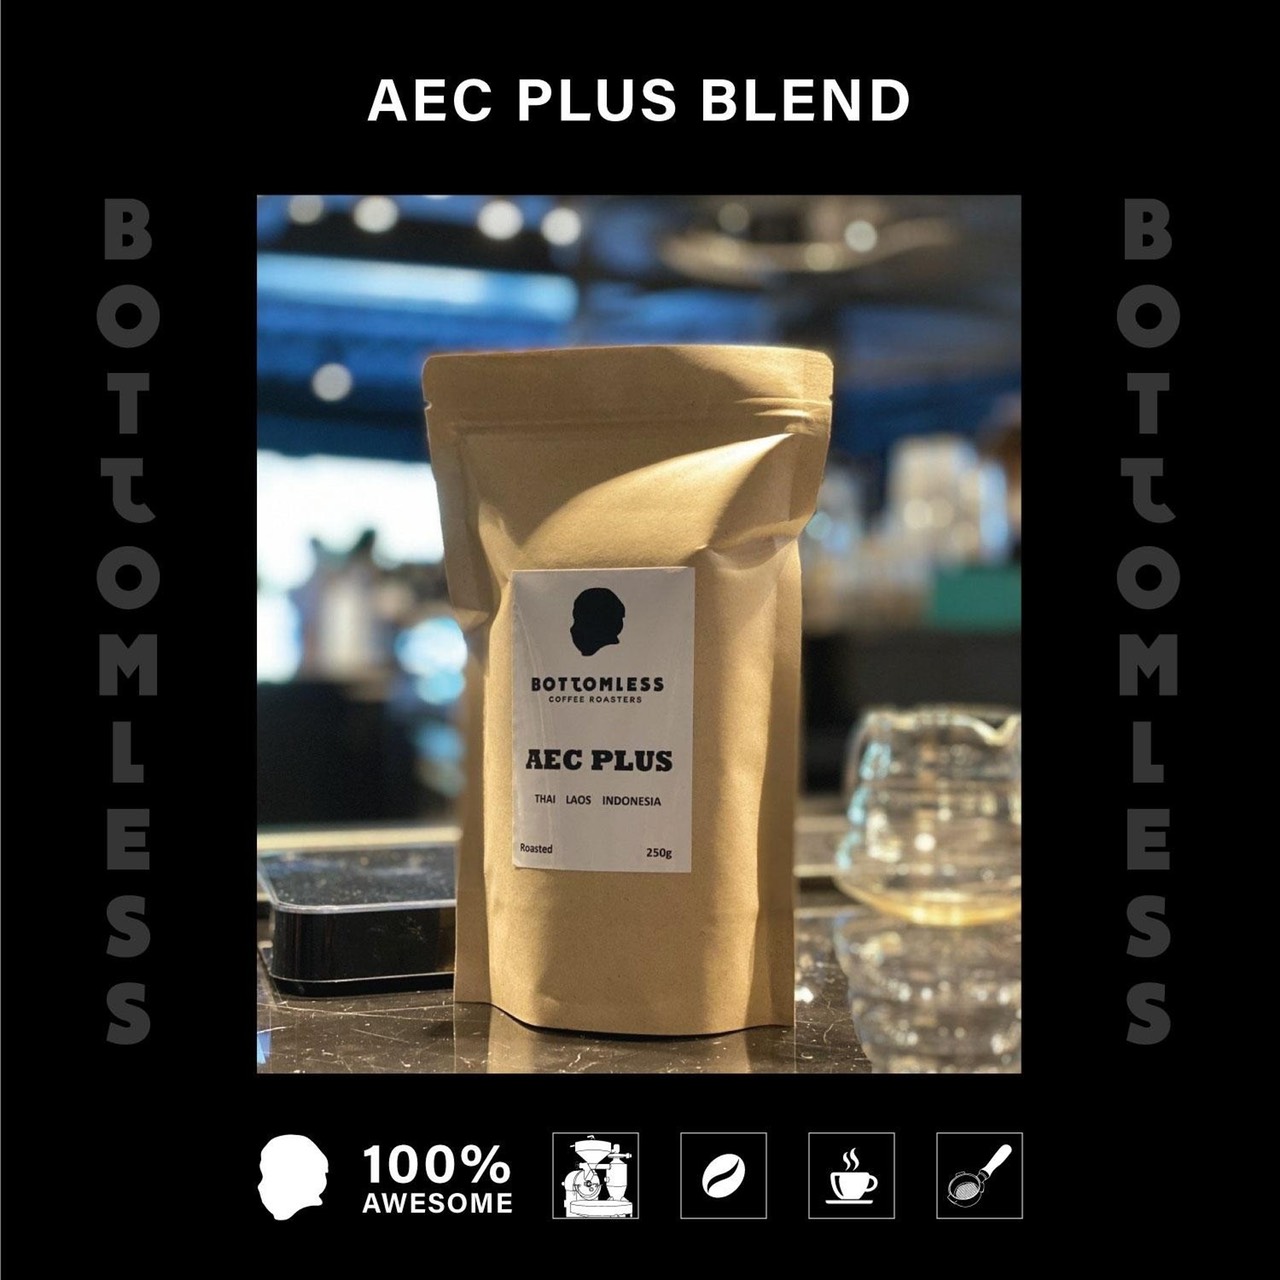 [Bottomless] เมล็ดกาแฟคั่ว บอททอมเลส - AEC Plus Blend (ไทย-ลาว-อินโด) คั่วค่อนข้างเข้ม ขนาด 250 กรัม ( AEC Plus Blend (Thai-Laos-Indo) Roasted Coffee Beans - Medium to Dark Roast ) (100% Arabica)